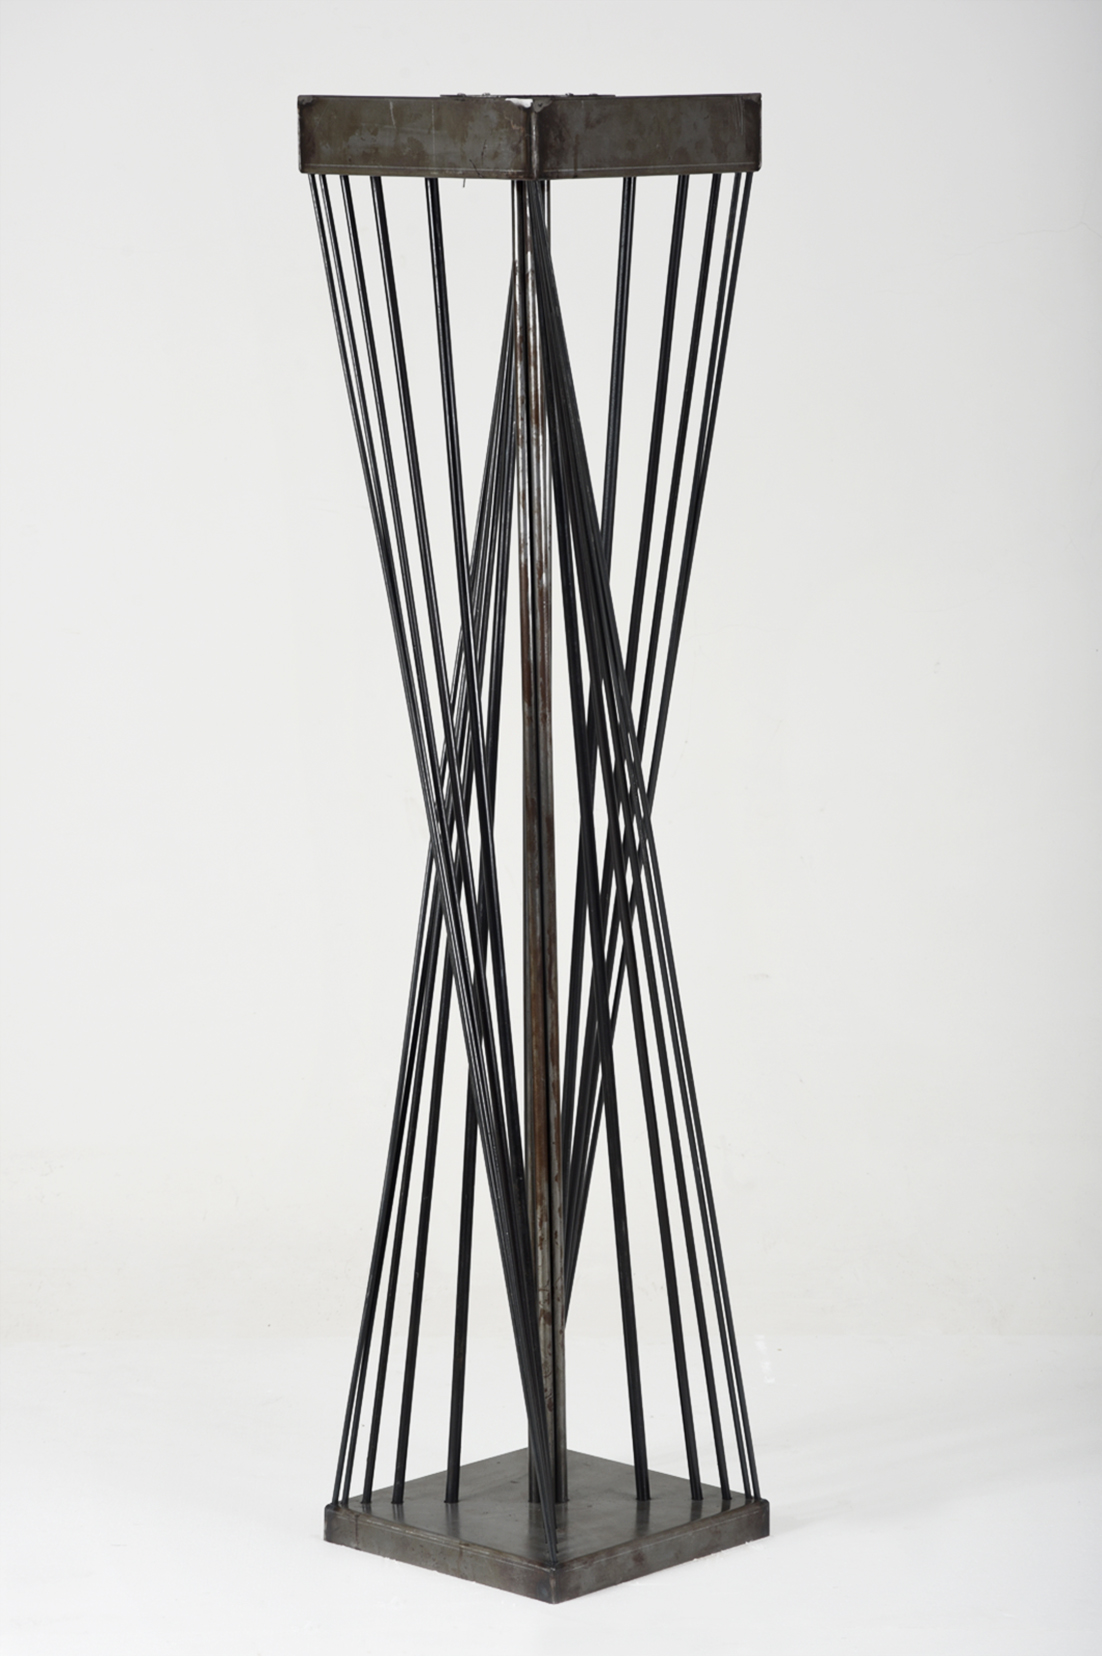 kurvo - Iron Table with  rotating turntable for vase  - 1 - 2016 - £750